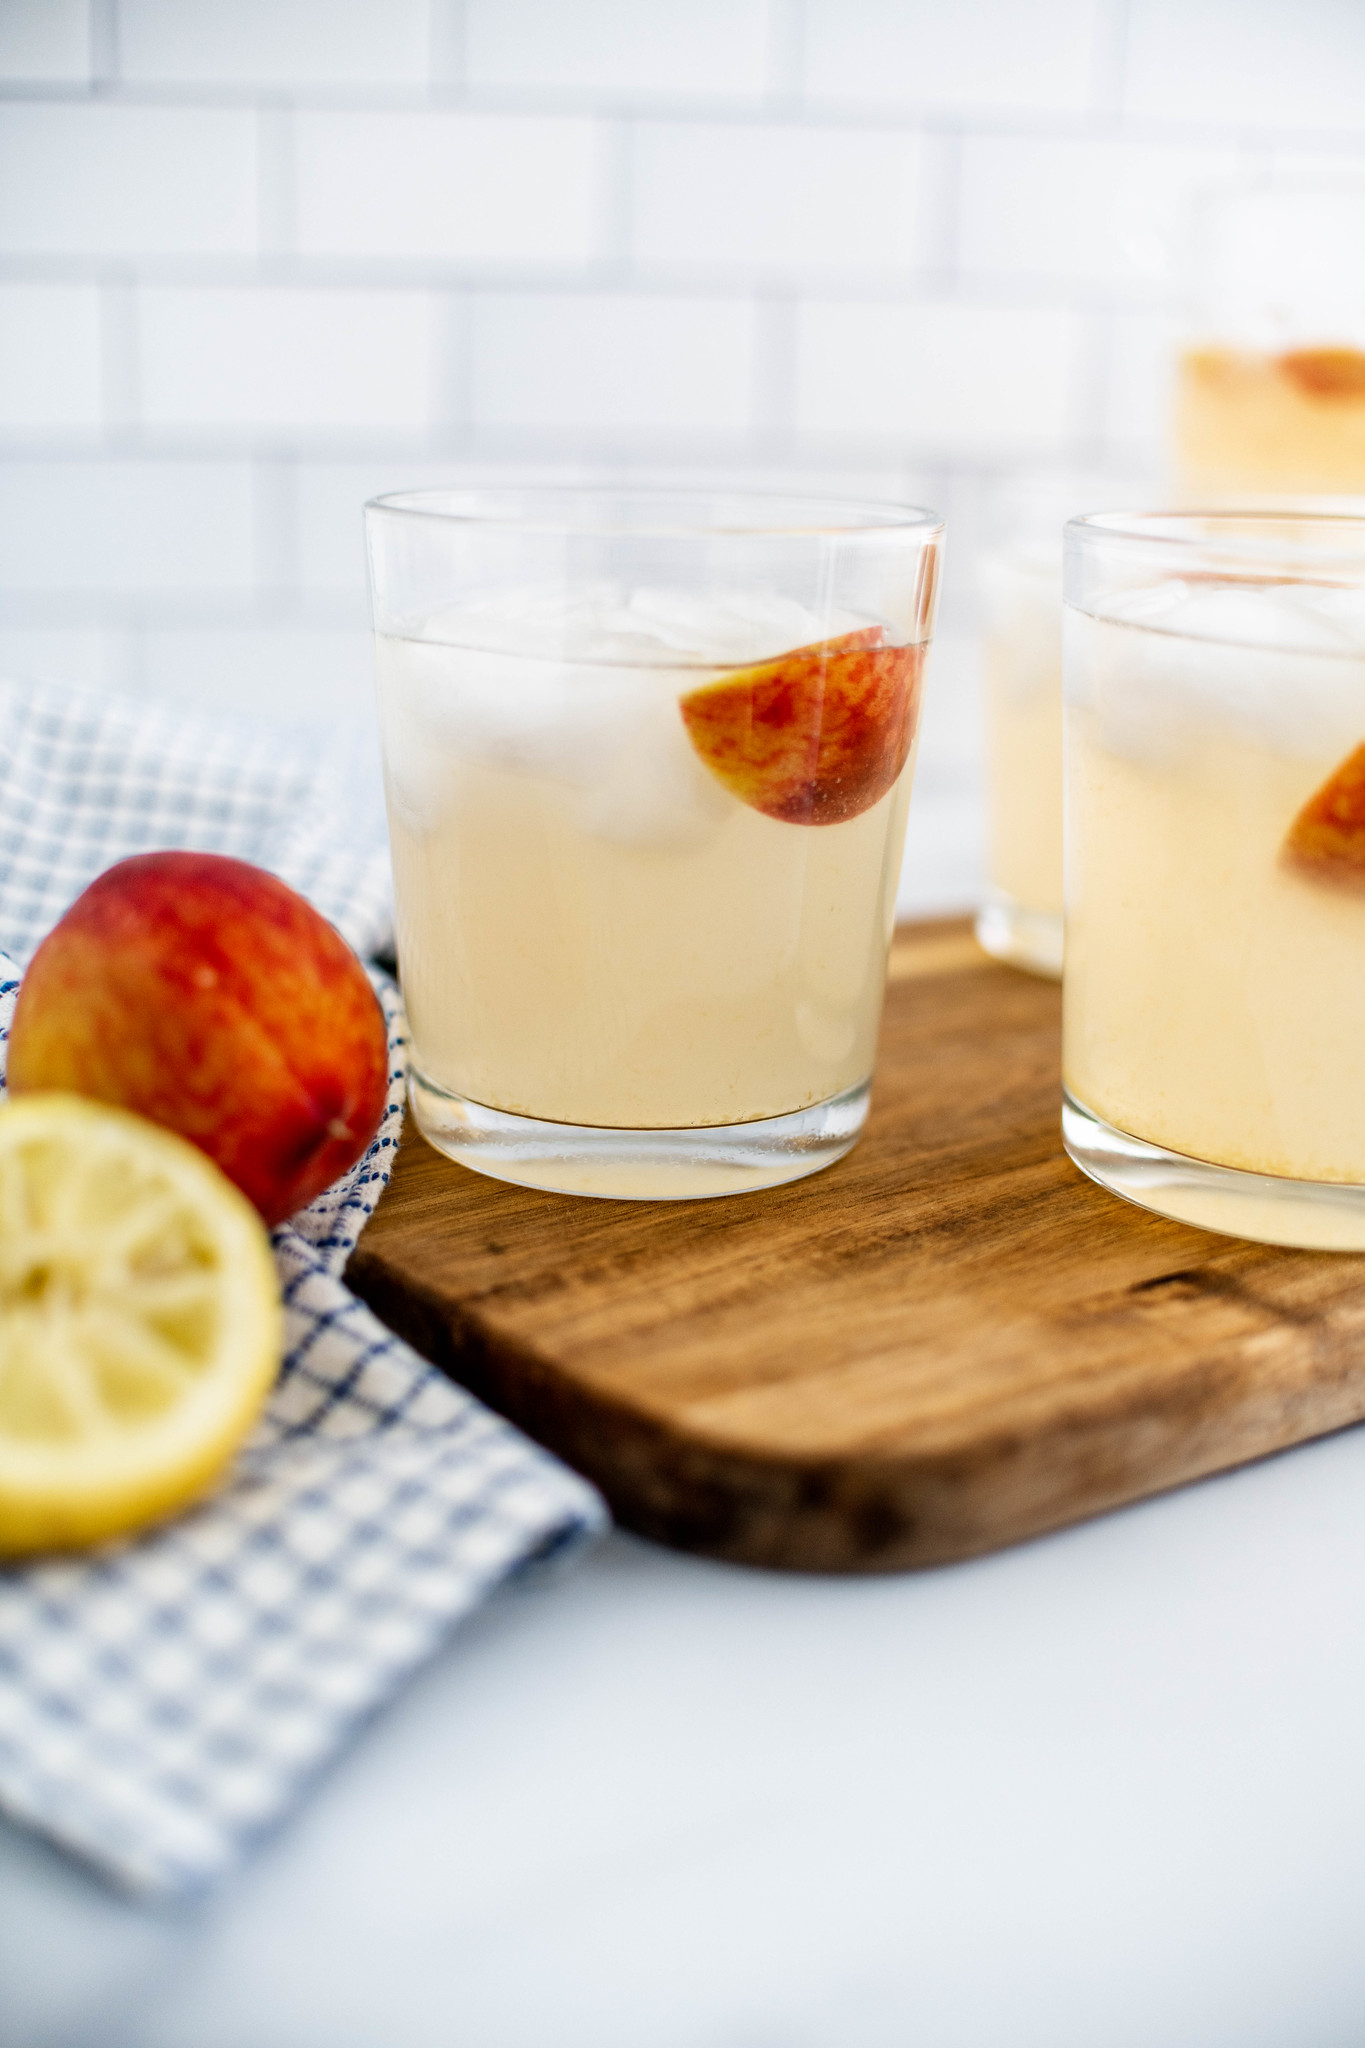 Glass of peach lemonade with a peach slice garnish.